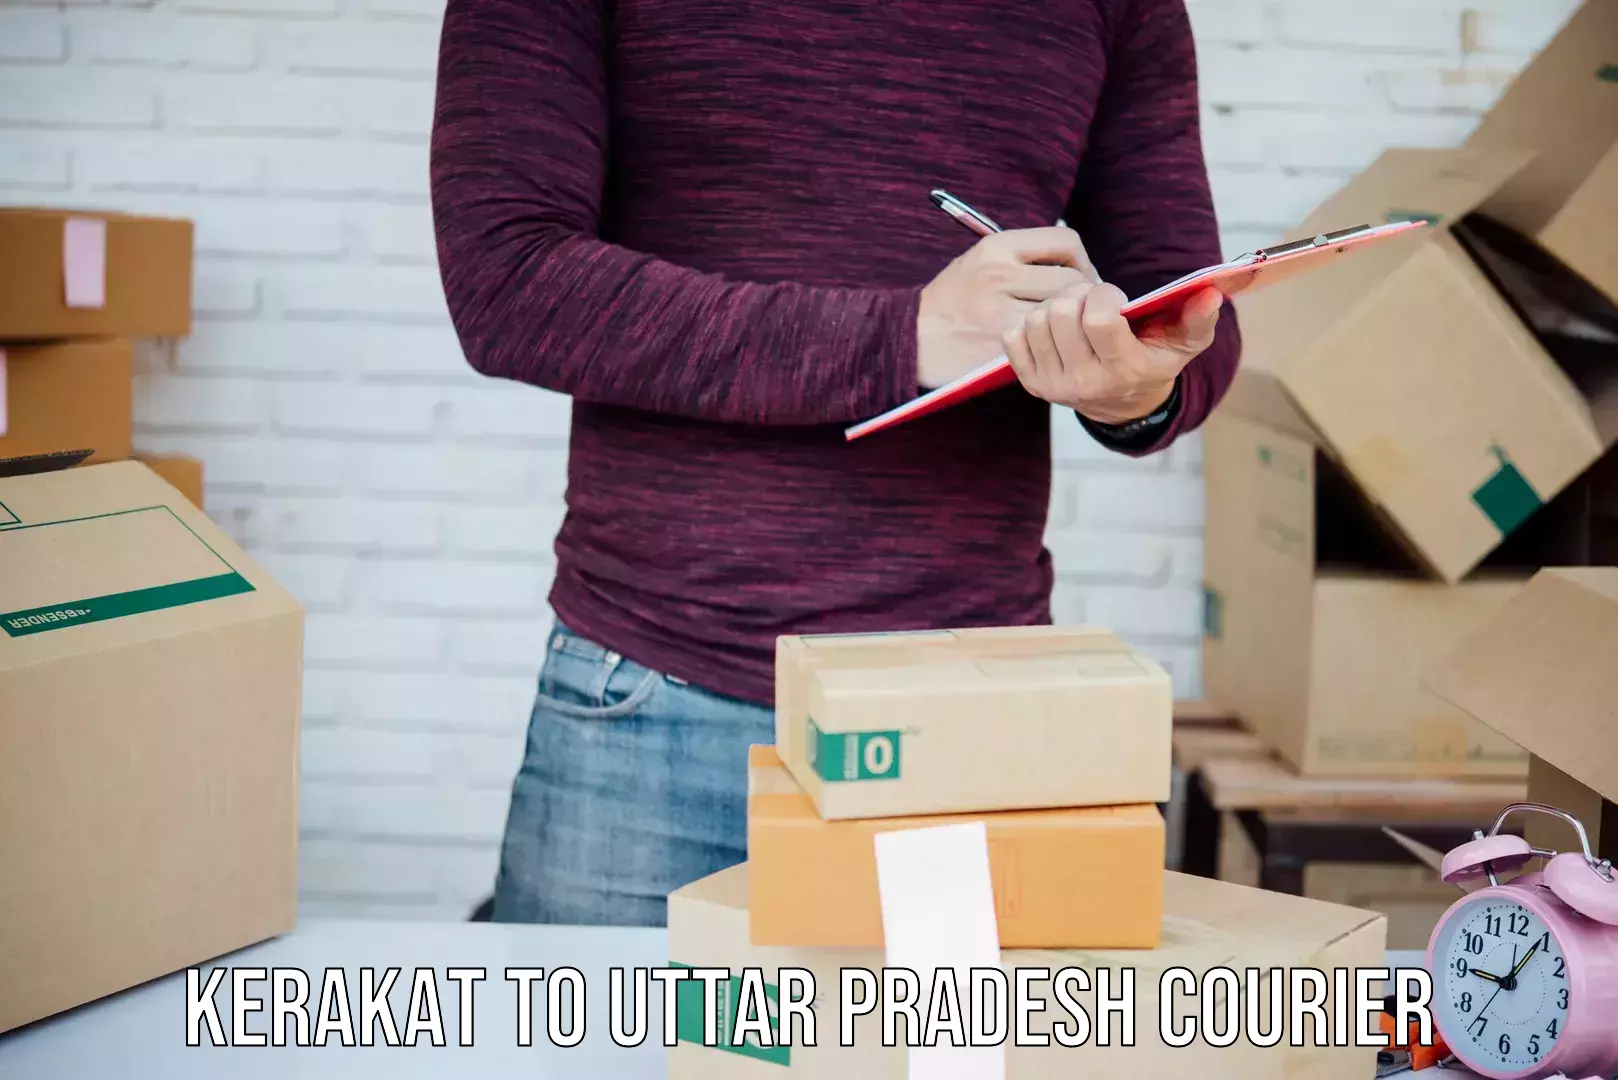 24/7 courier service Kerakat to Uttar Pradesh